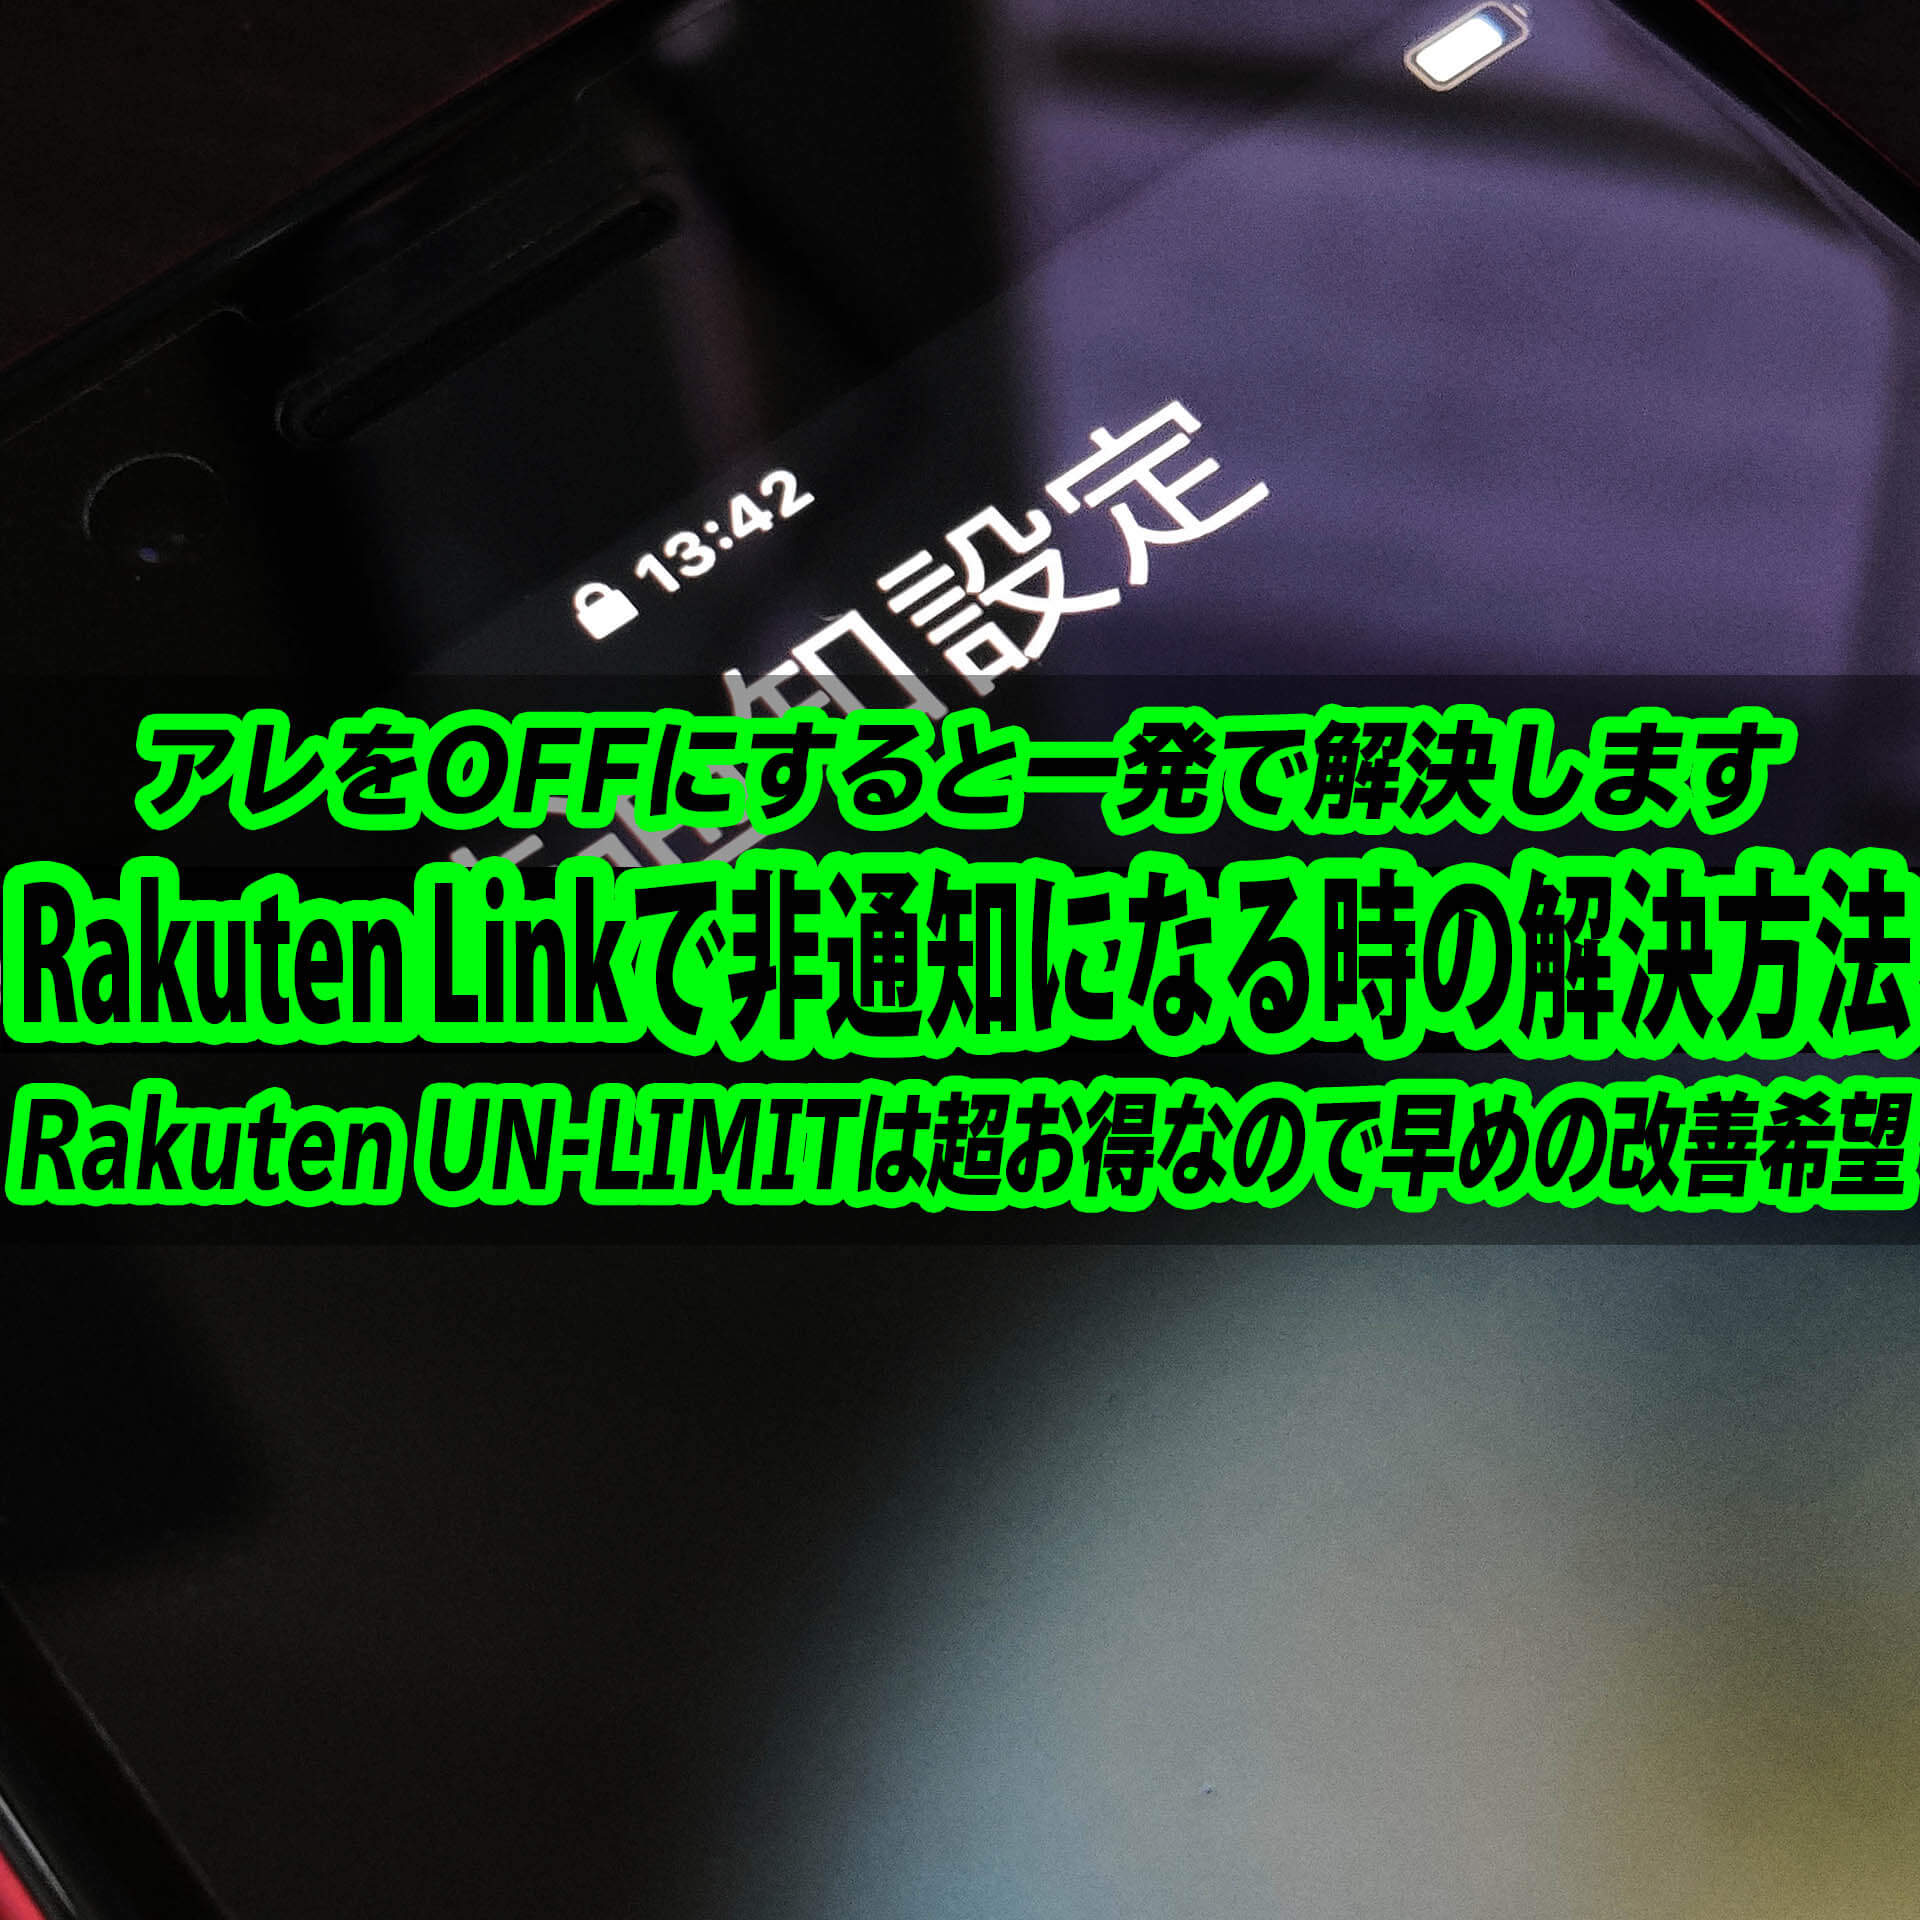 Rakuten Un Limitのrakuten Linkで電話すると非通知になる 超簡単な解決方法はコレだ ワンタップ